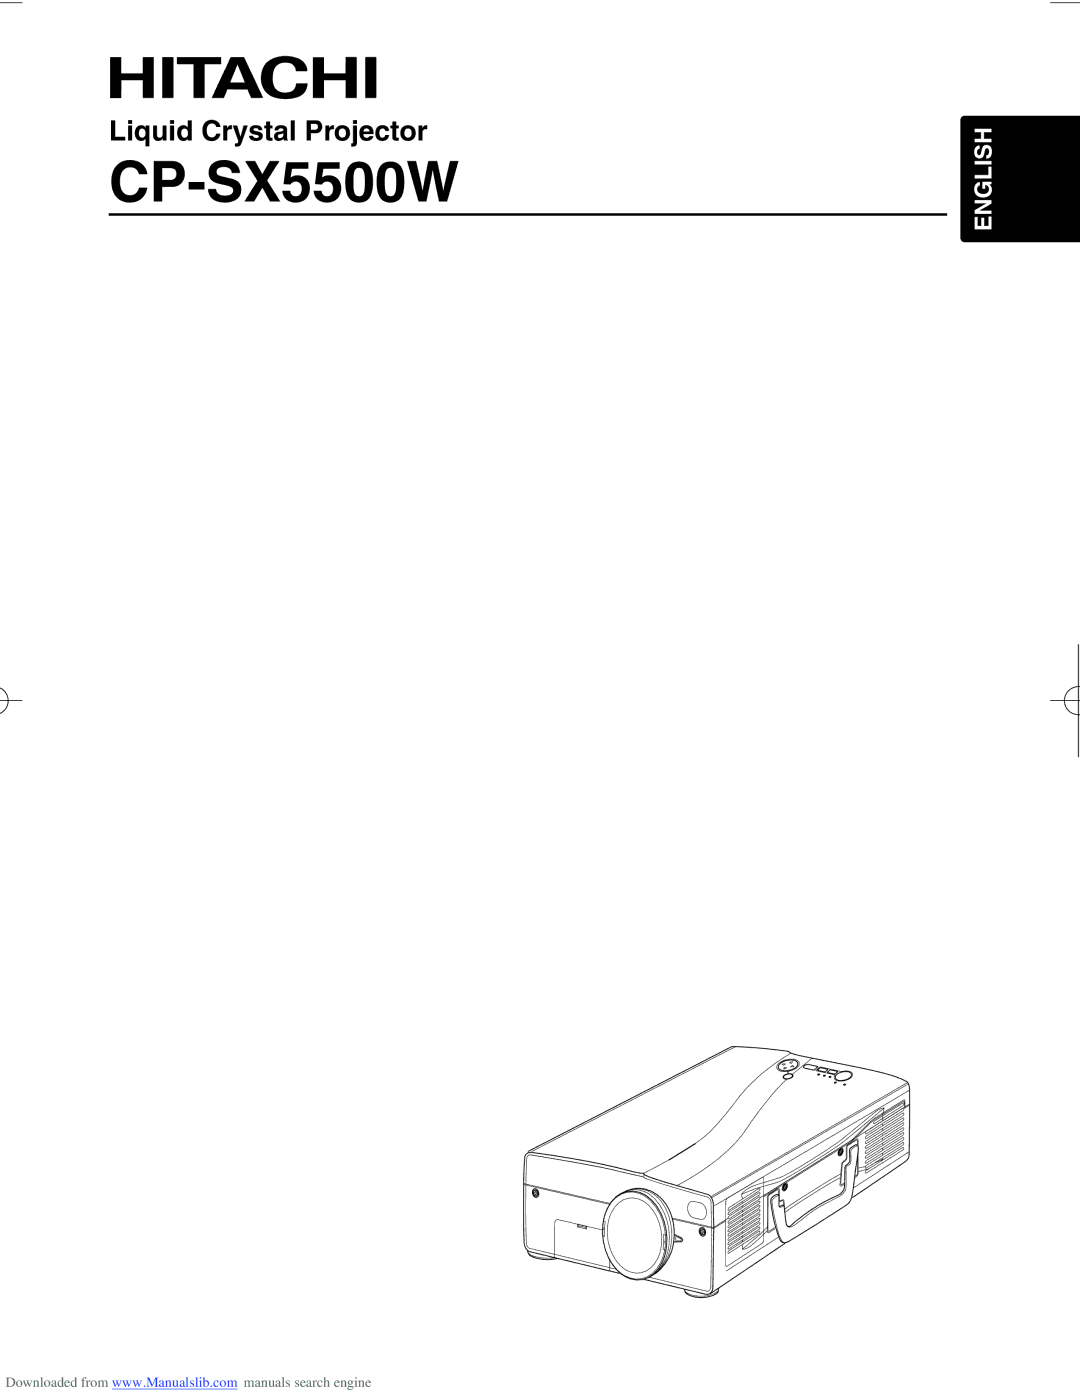 Hitachi CP-SX5500W manual 